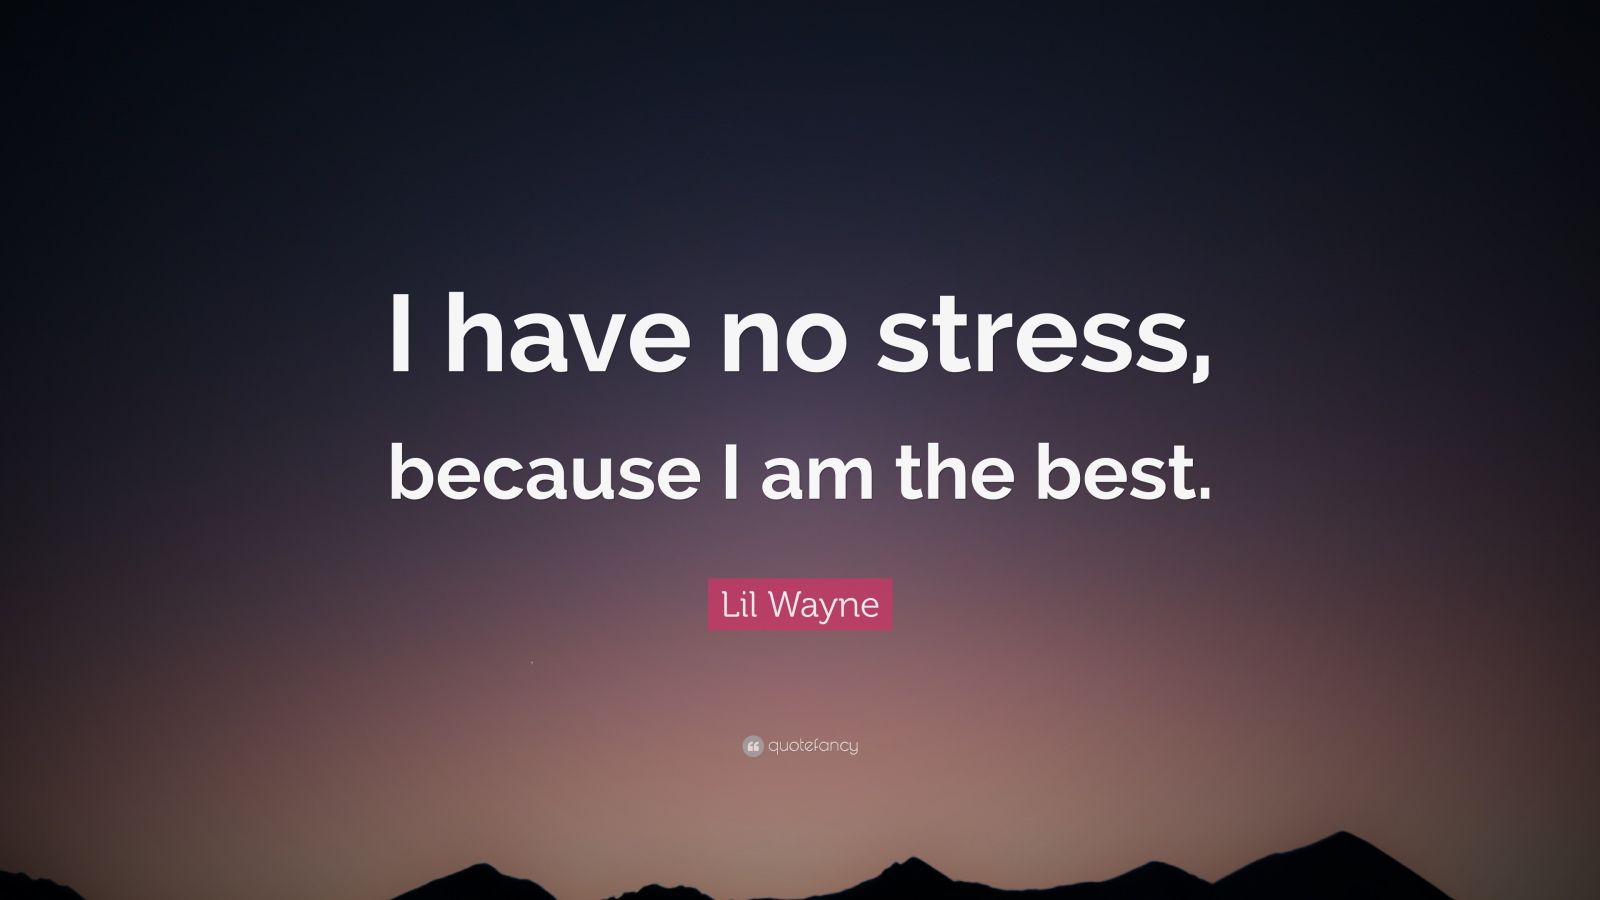 Lil Wayne Quote: 